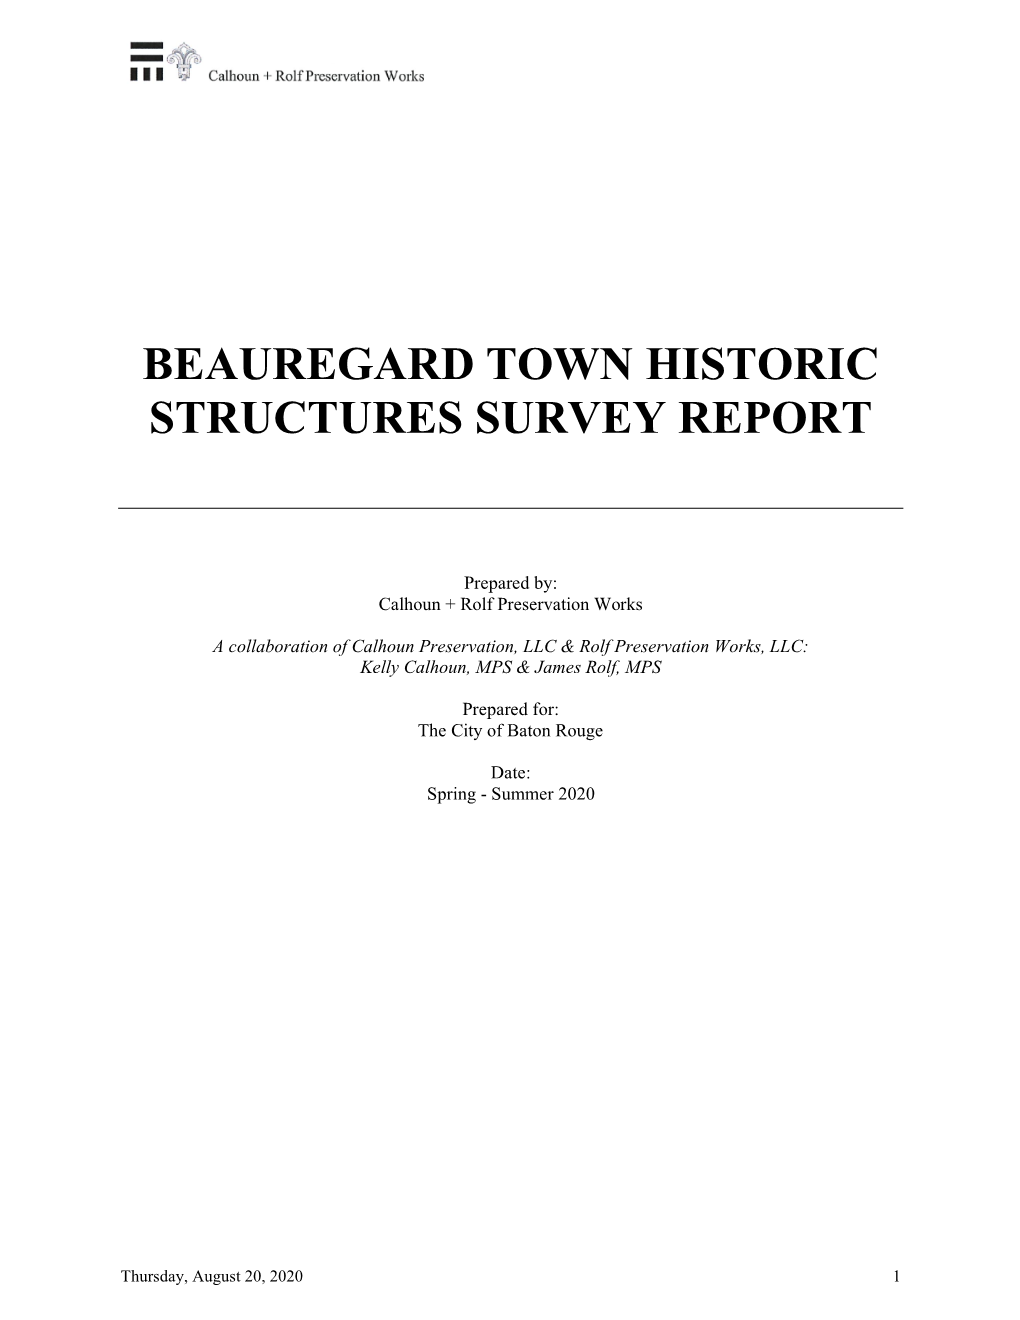 Beauregard Town Historic Structures Survey Report